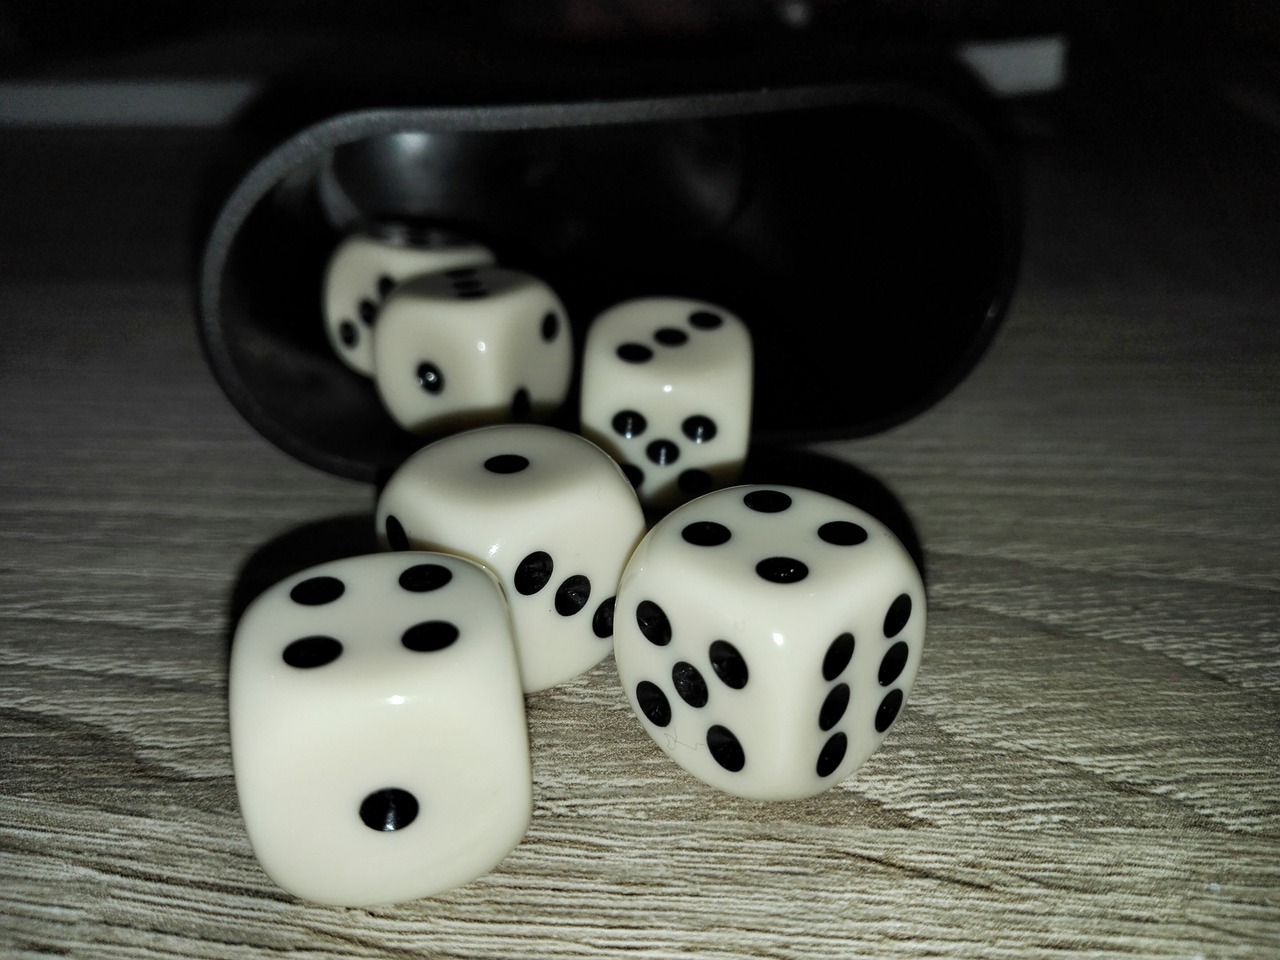 playing dice craps dots free photo